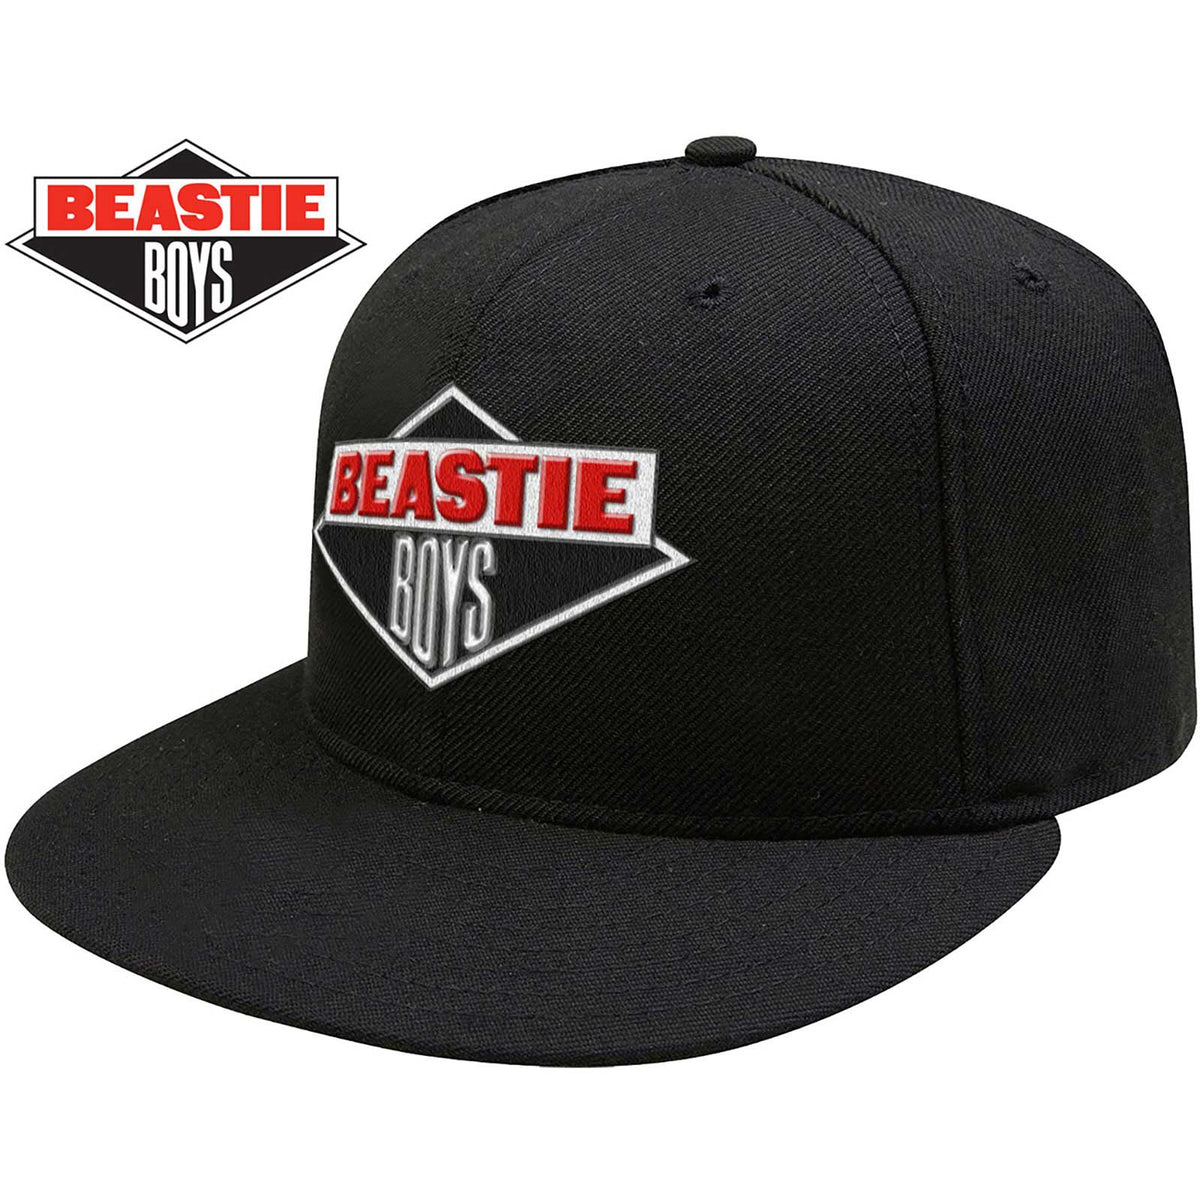 The Beastie Boys Snapback Cap - Diamond Logo - Official Product